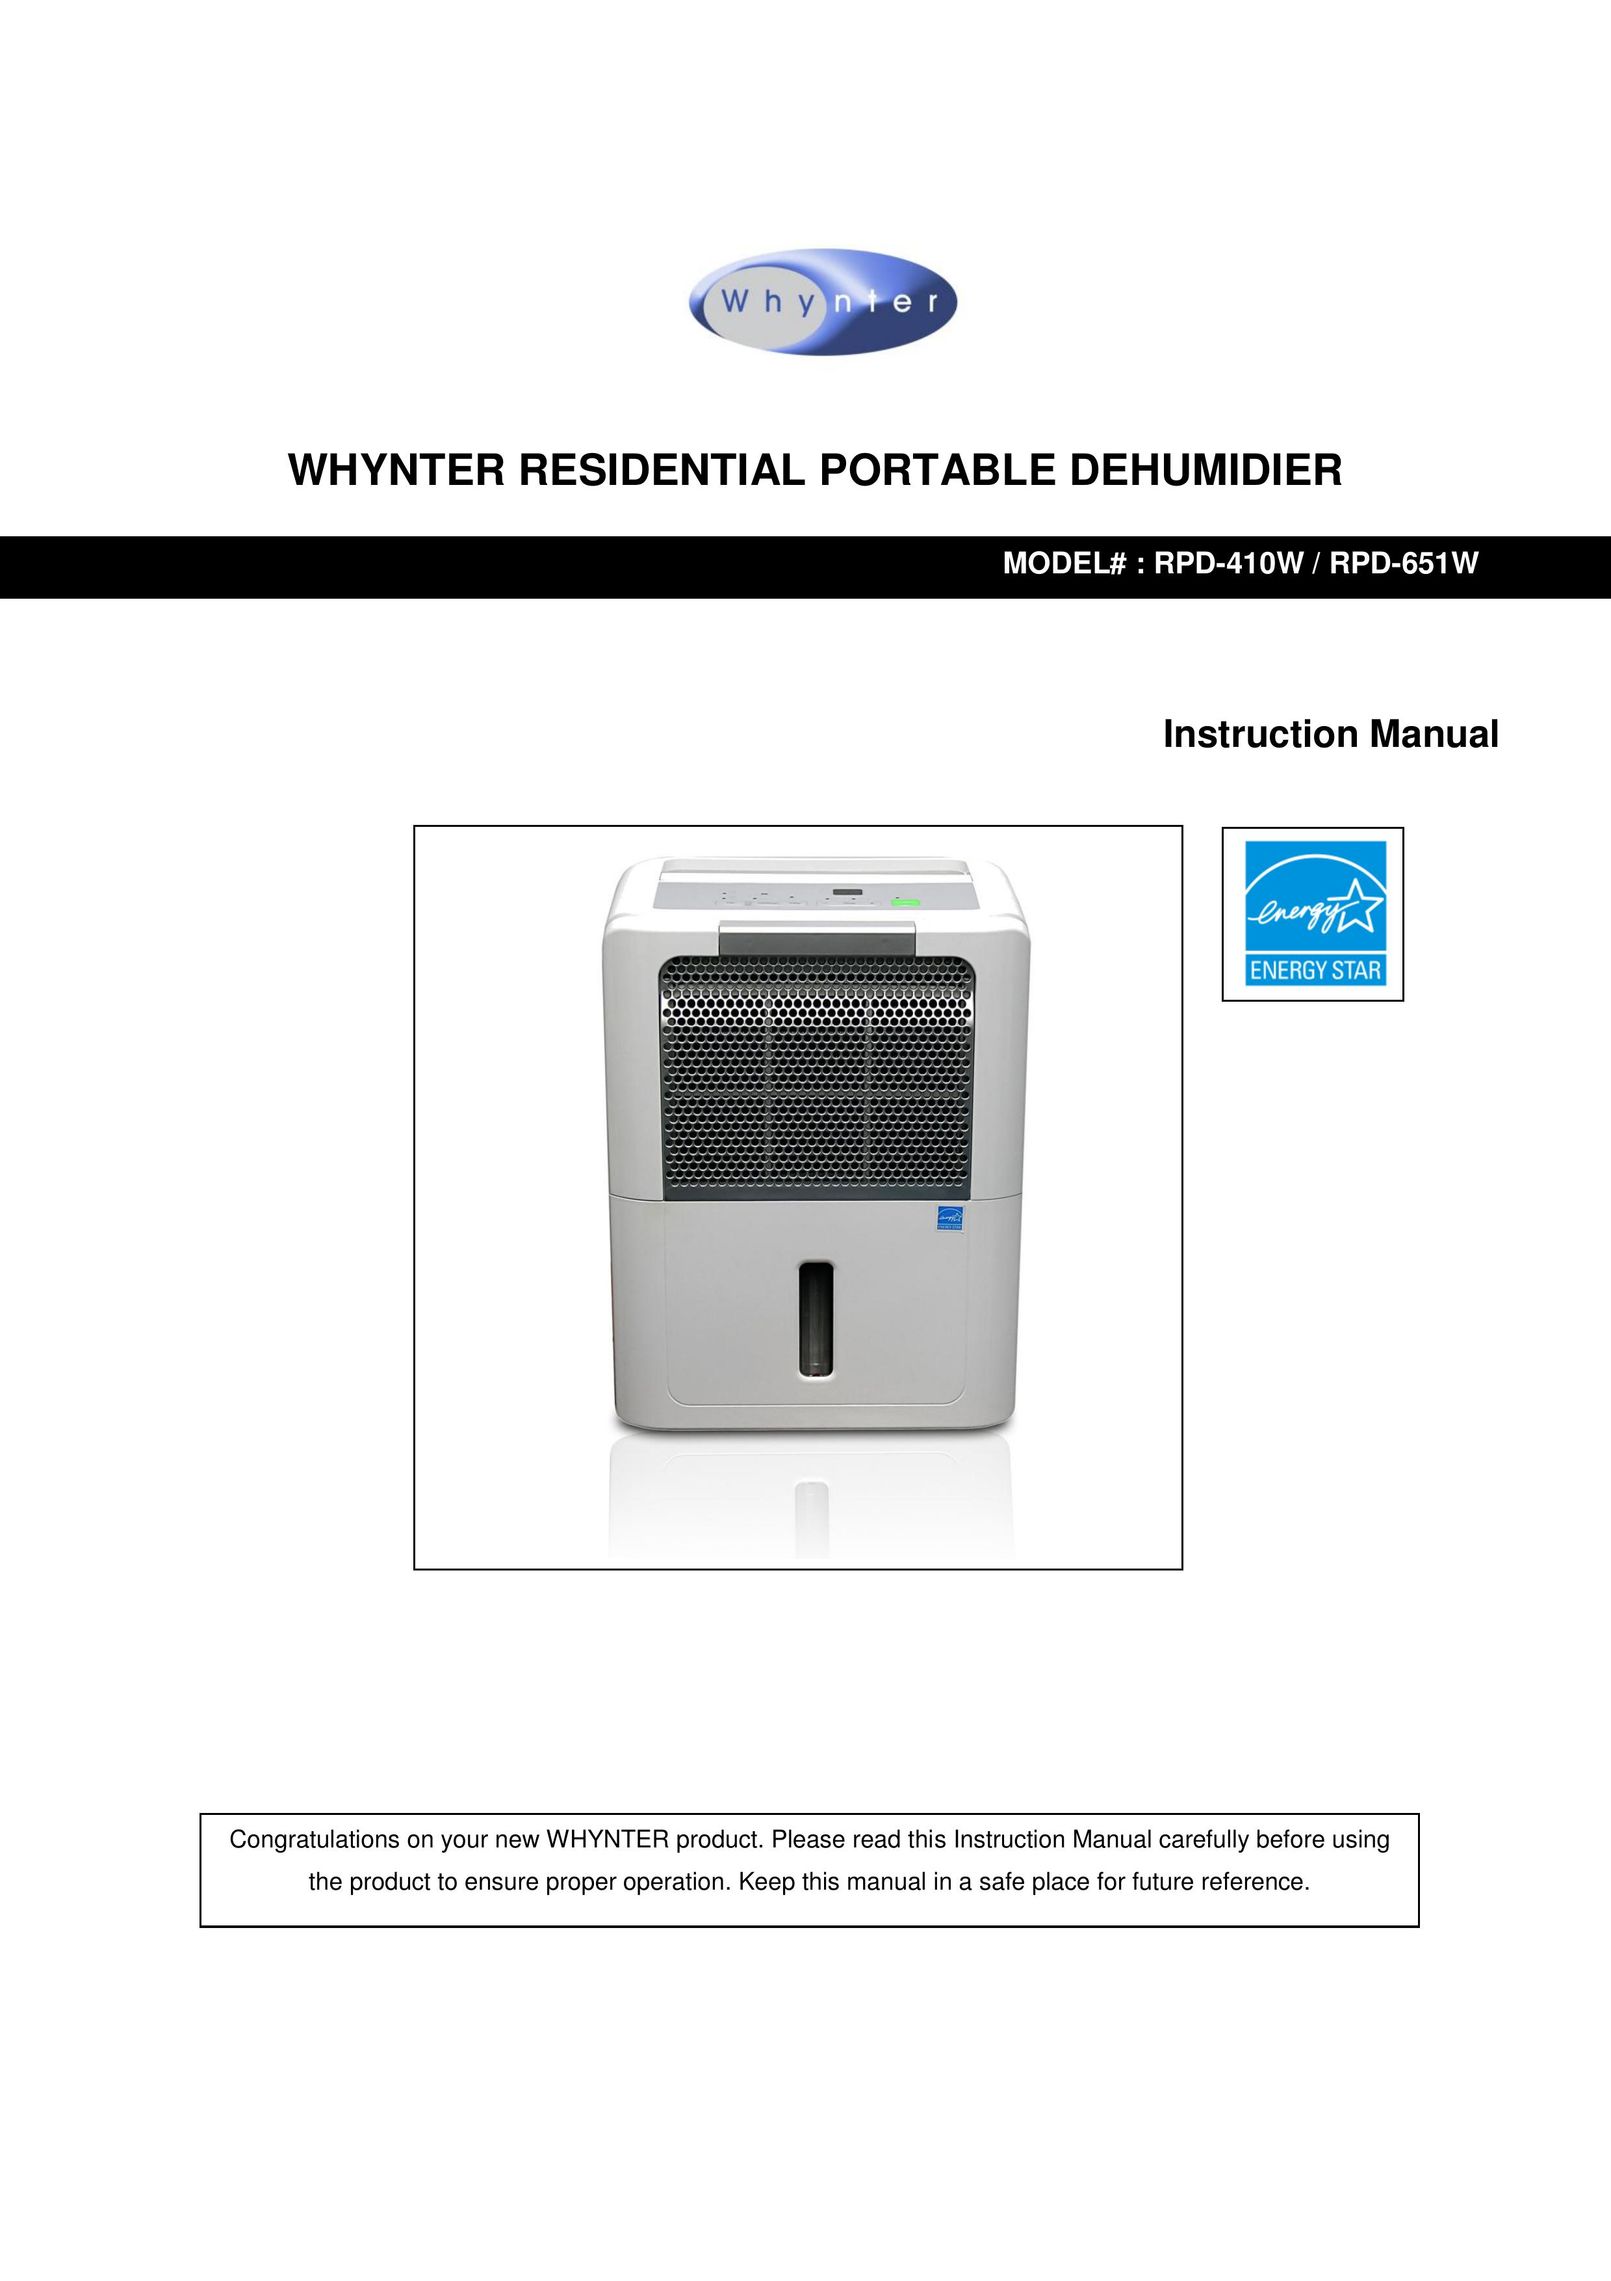 Whynter RPD-410W Dehumidifier User Manual